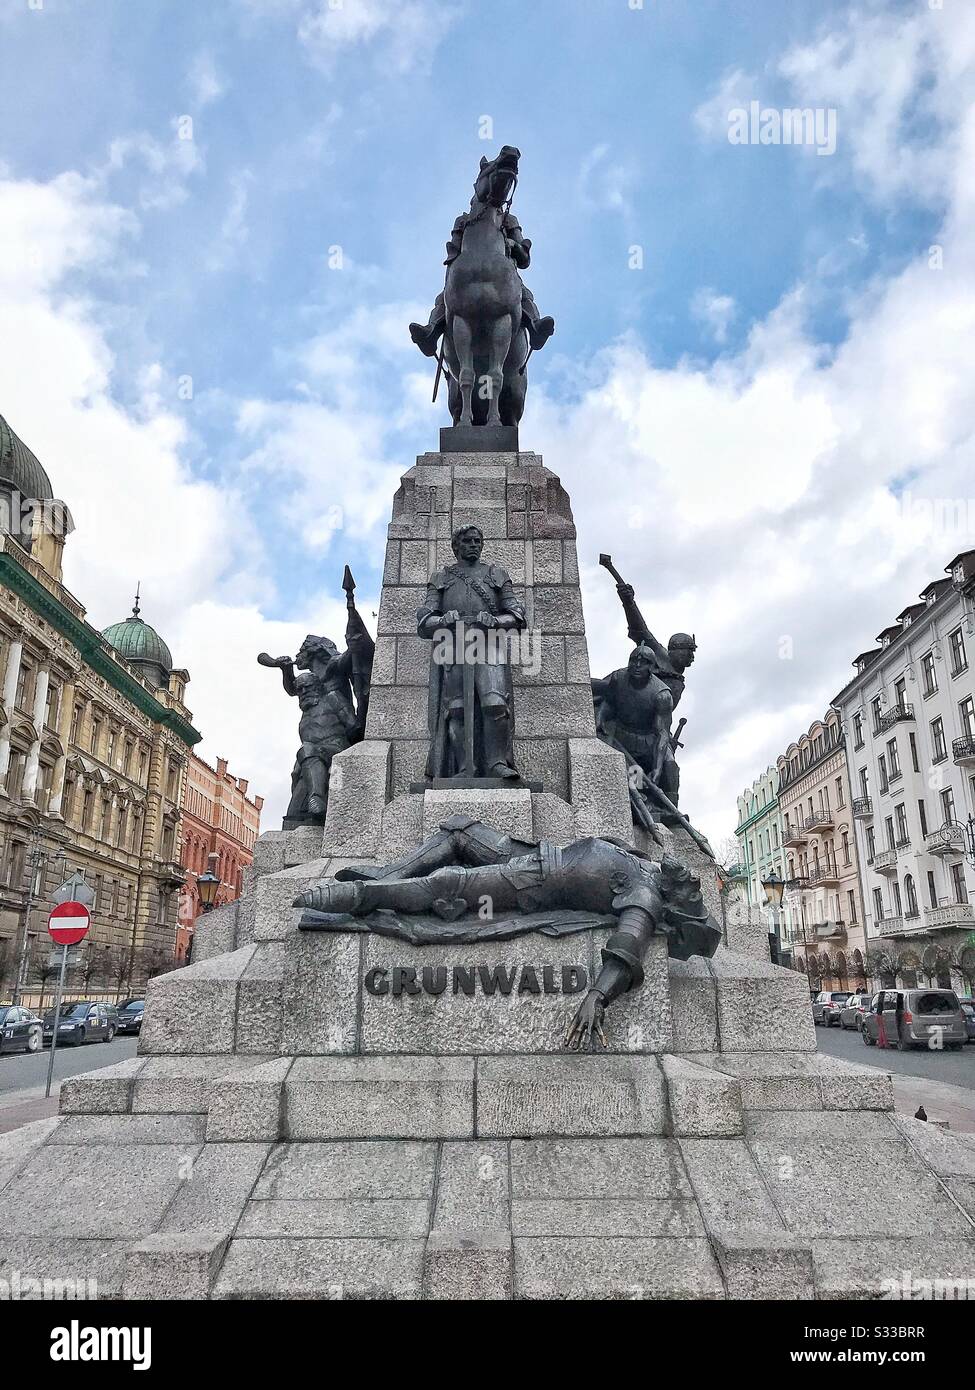 Grunwald statue, Krakow, Poland Stock Photo